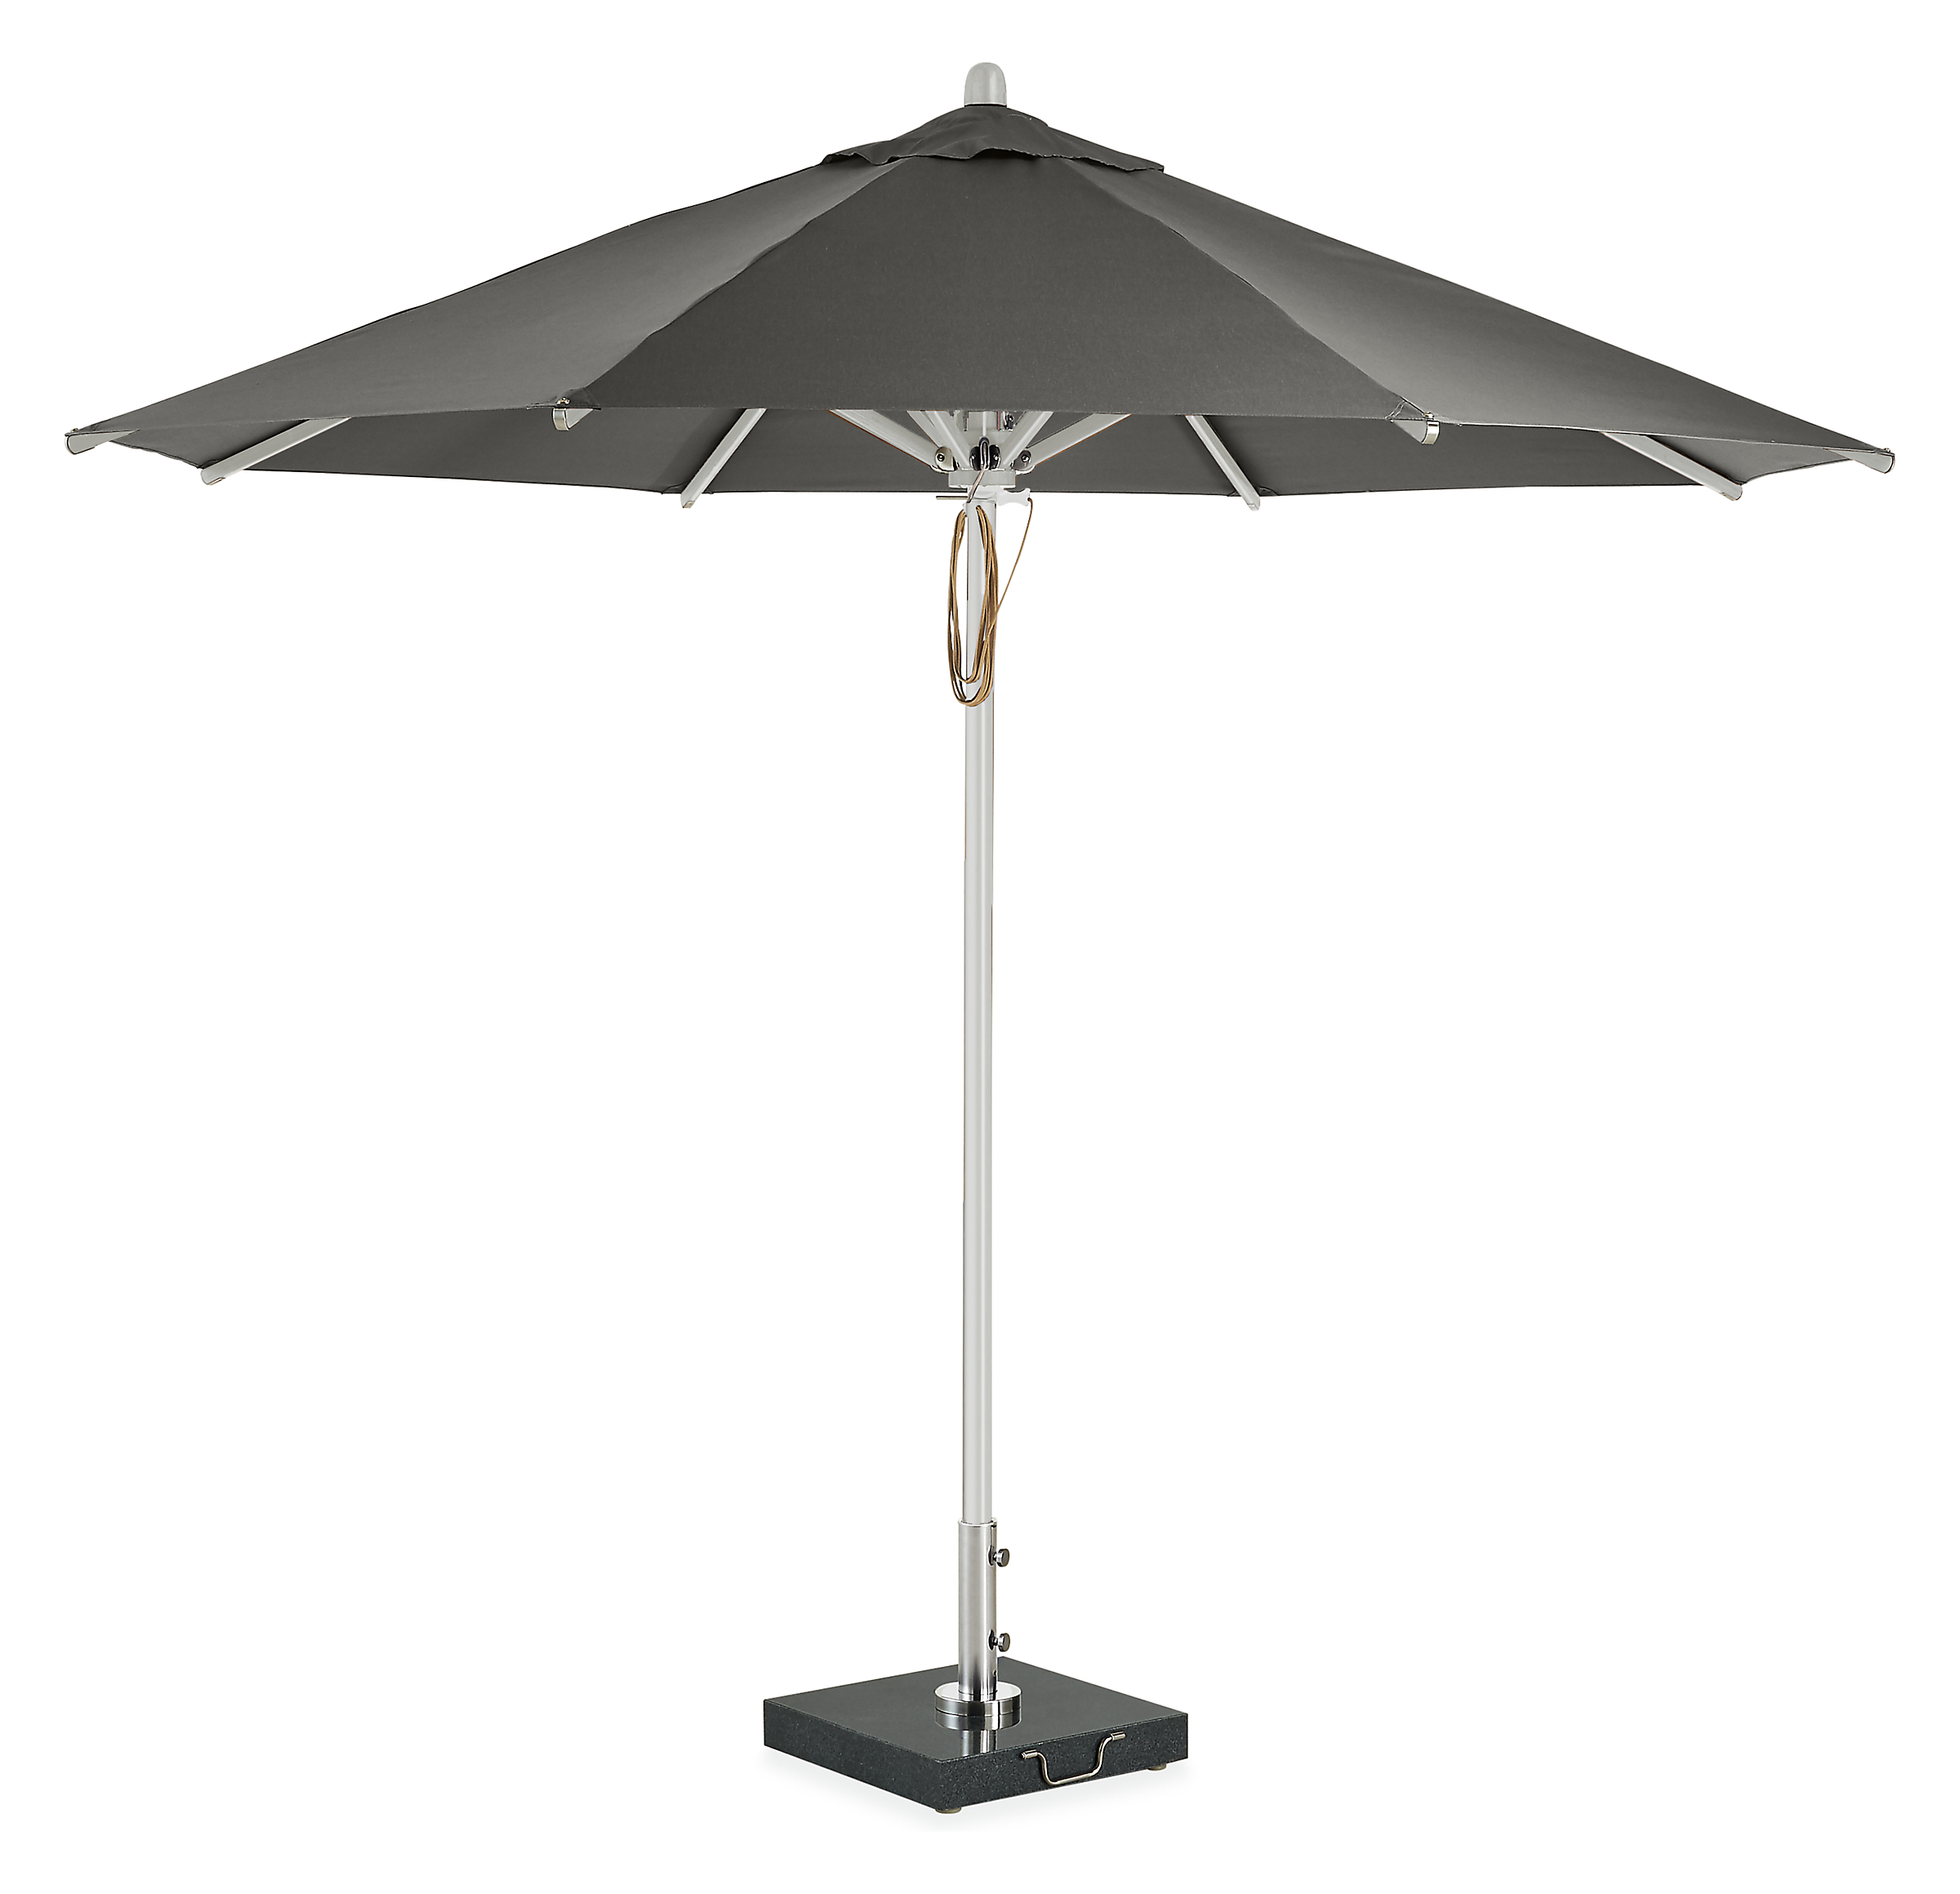 Cirro 10' Patio Umbrella in Grey with Aluminum Pole